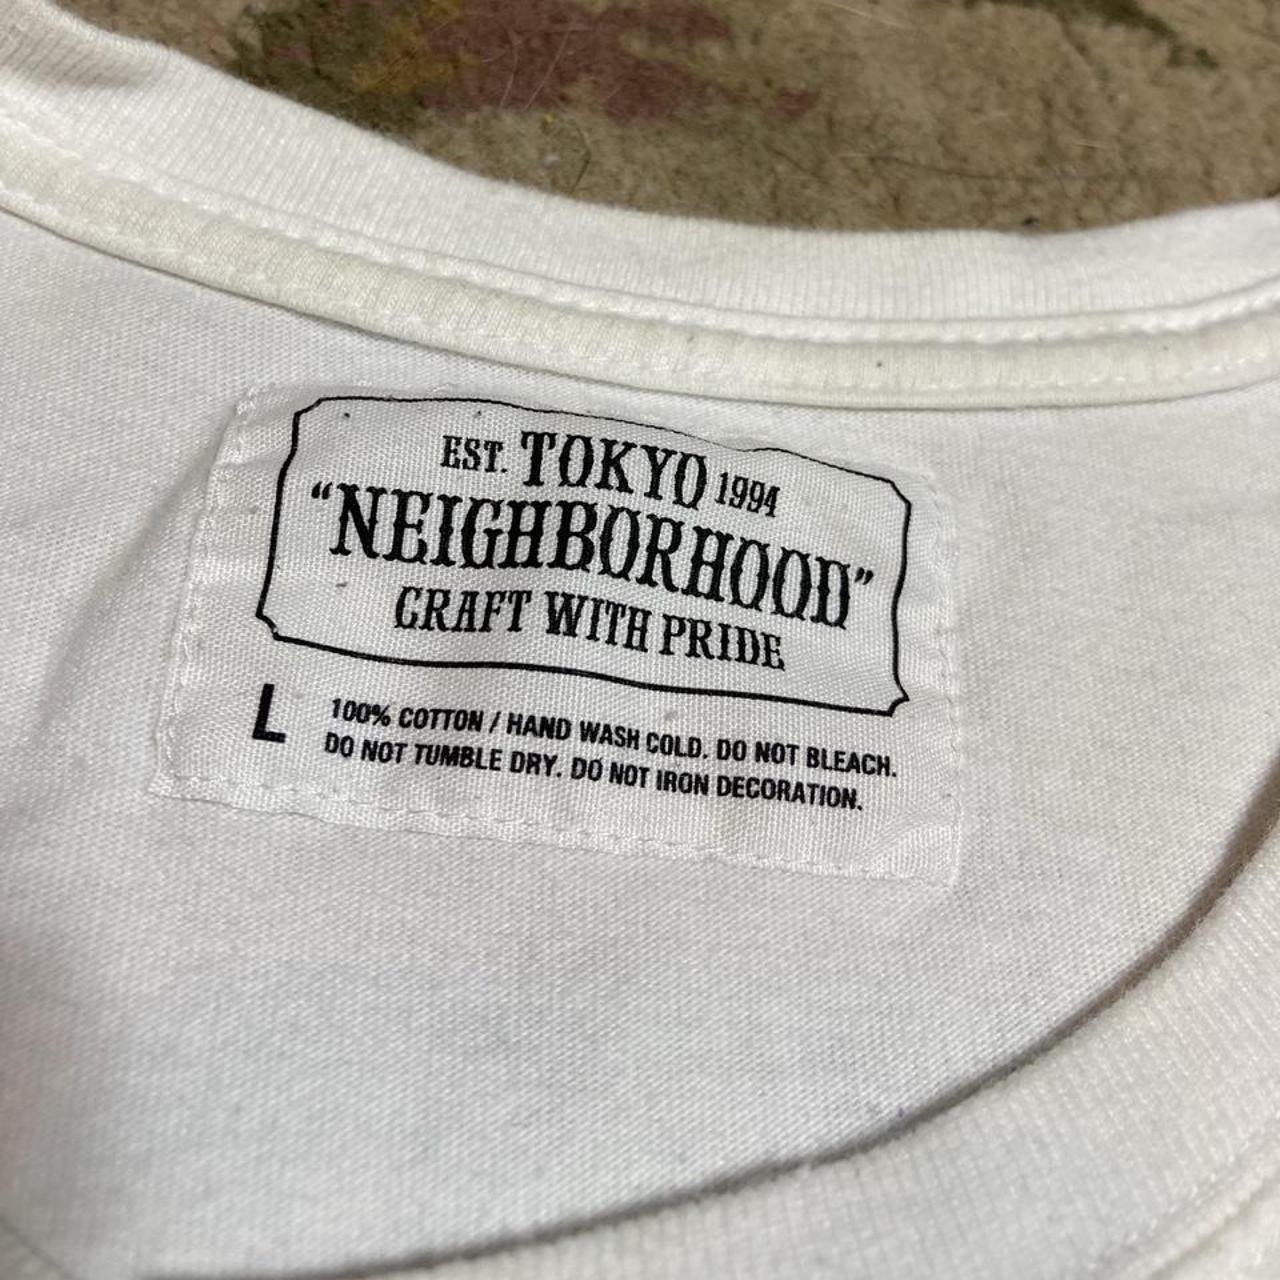 Neighborhood Men's White and Black T-shirt (2)